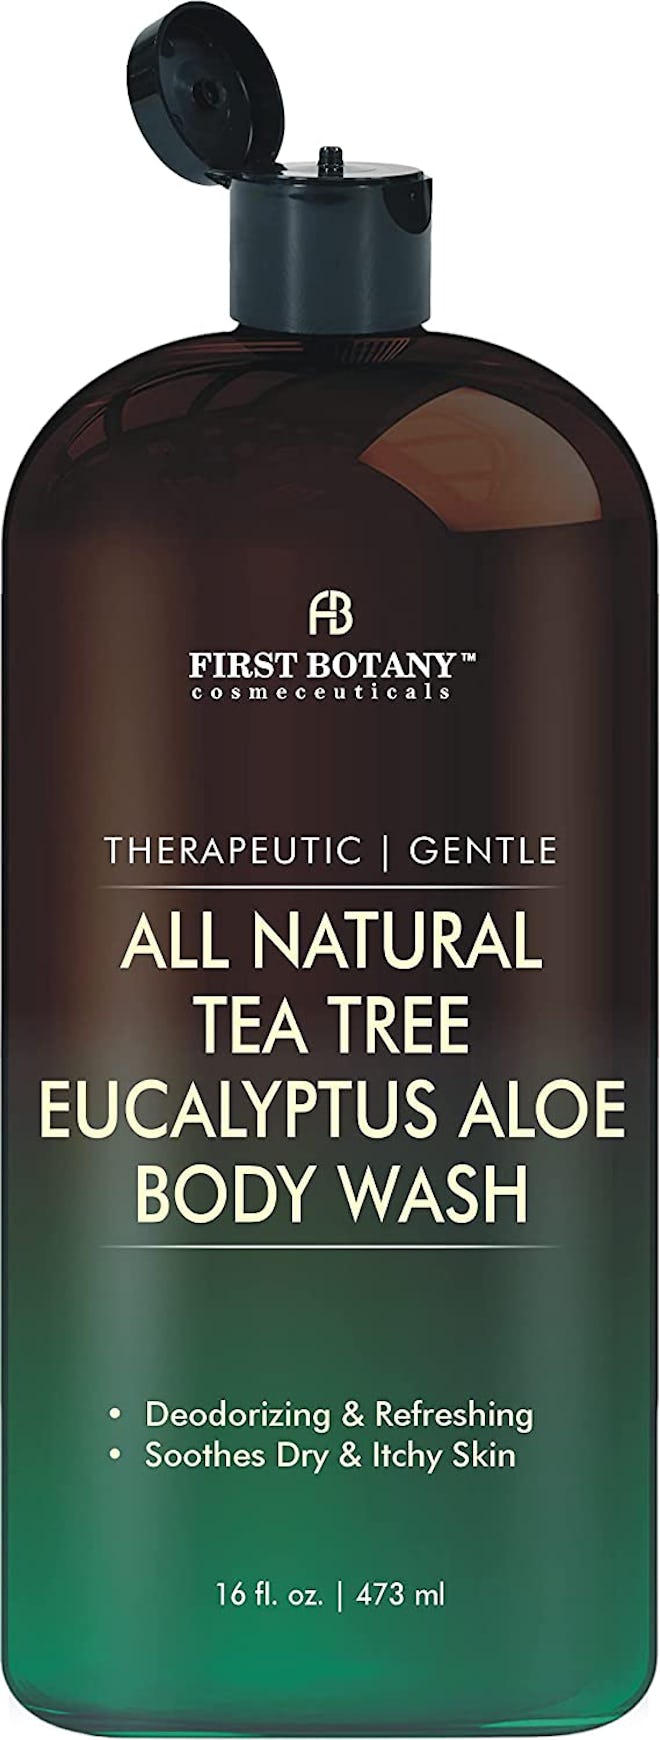 First Botany ALL Natural Tea Tree Body Wash